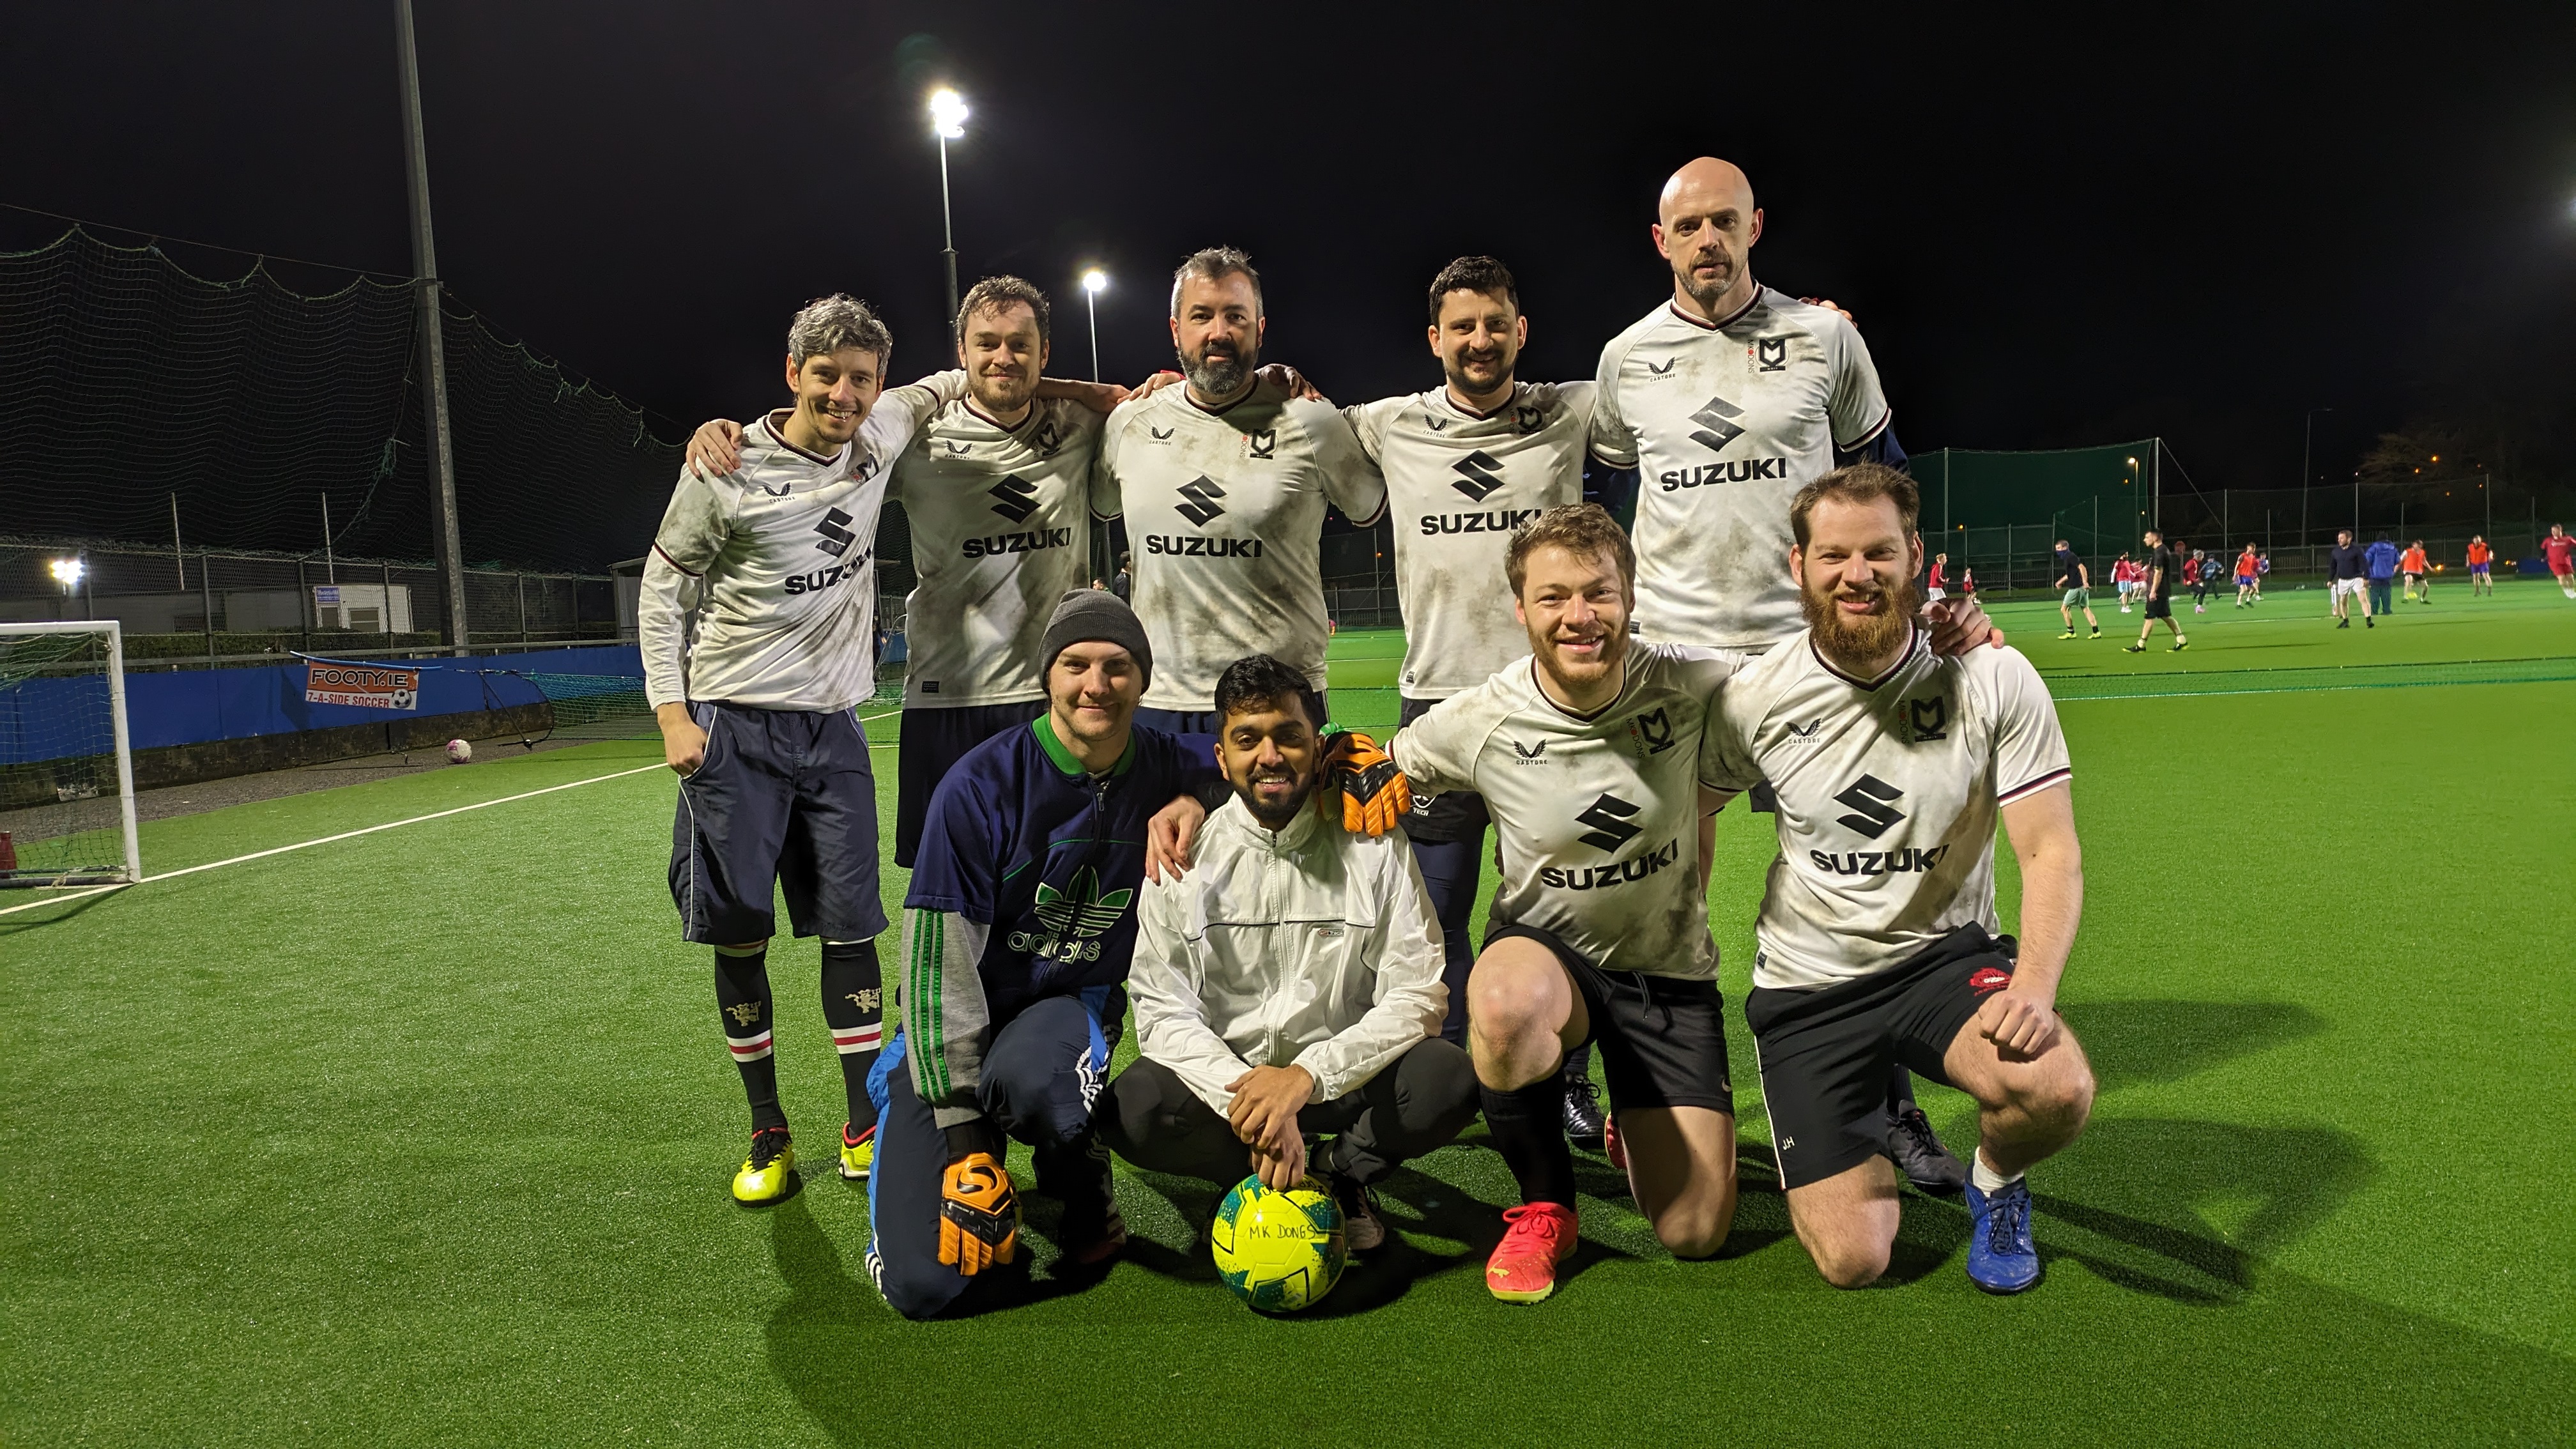 footy.ie soccer in cork team photo